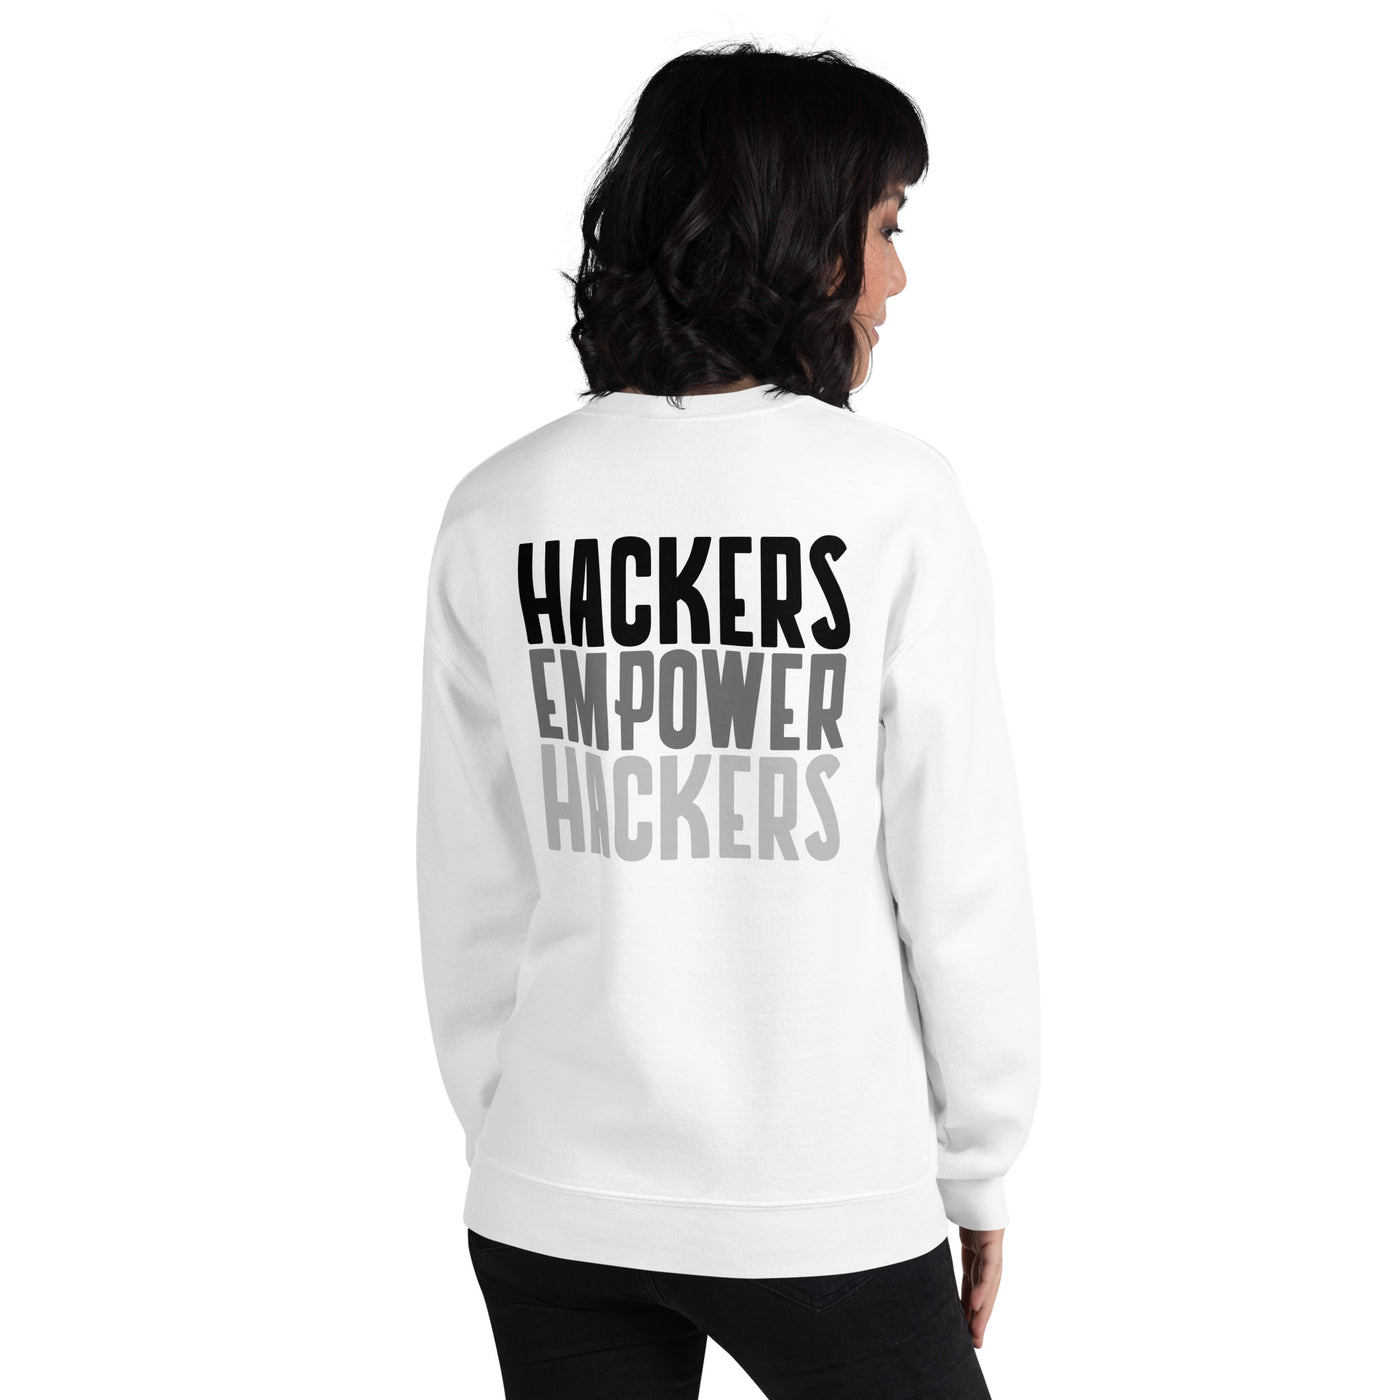 Hackers Empower Hackers - Unisex Sweatshirt ( Back Print )